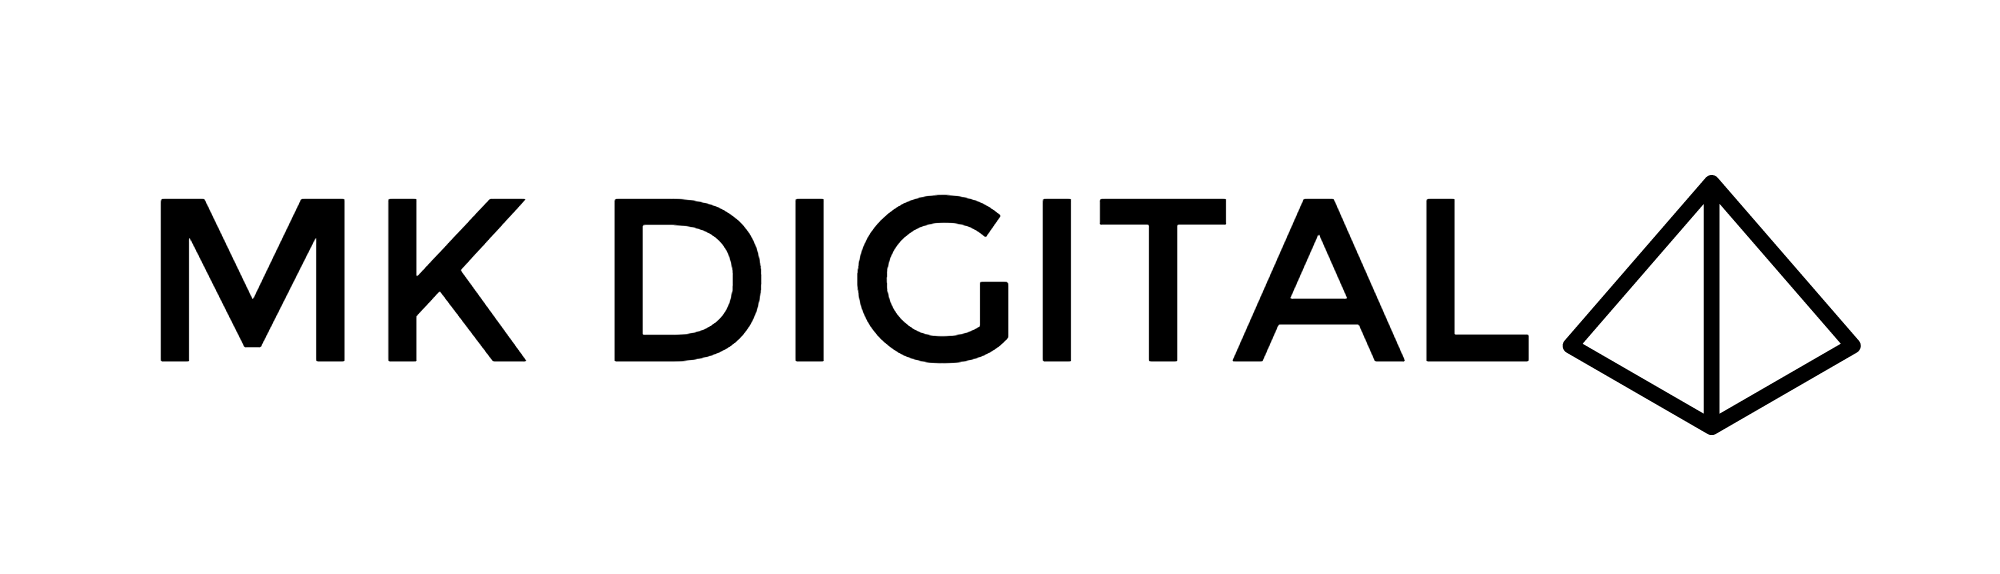 MK DIGITAL-pyramid-logo-black.png